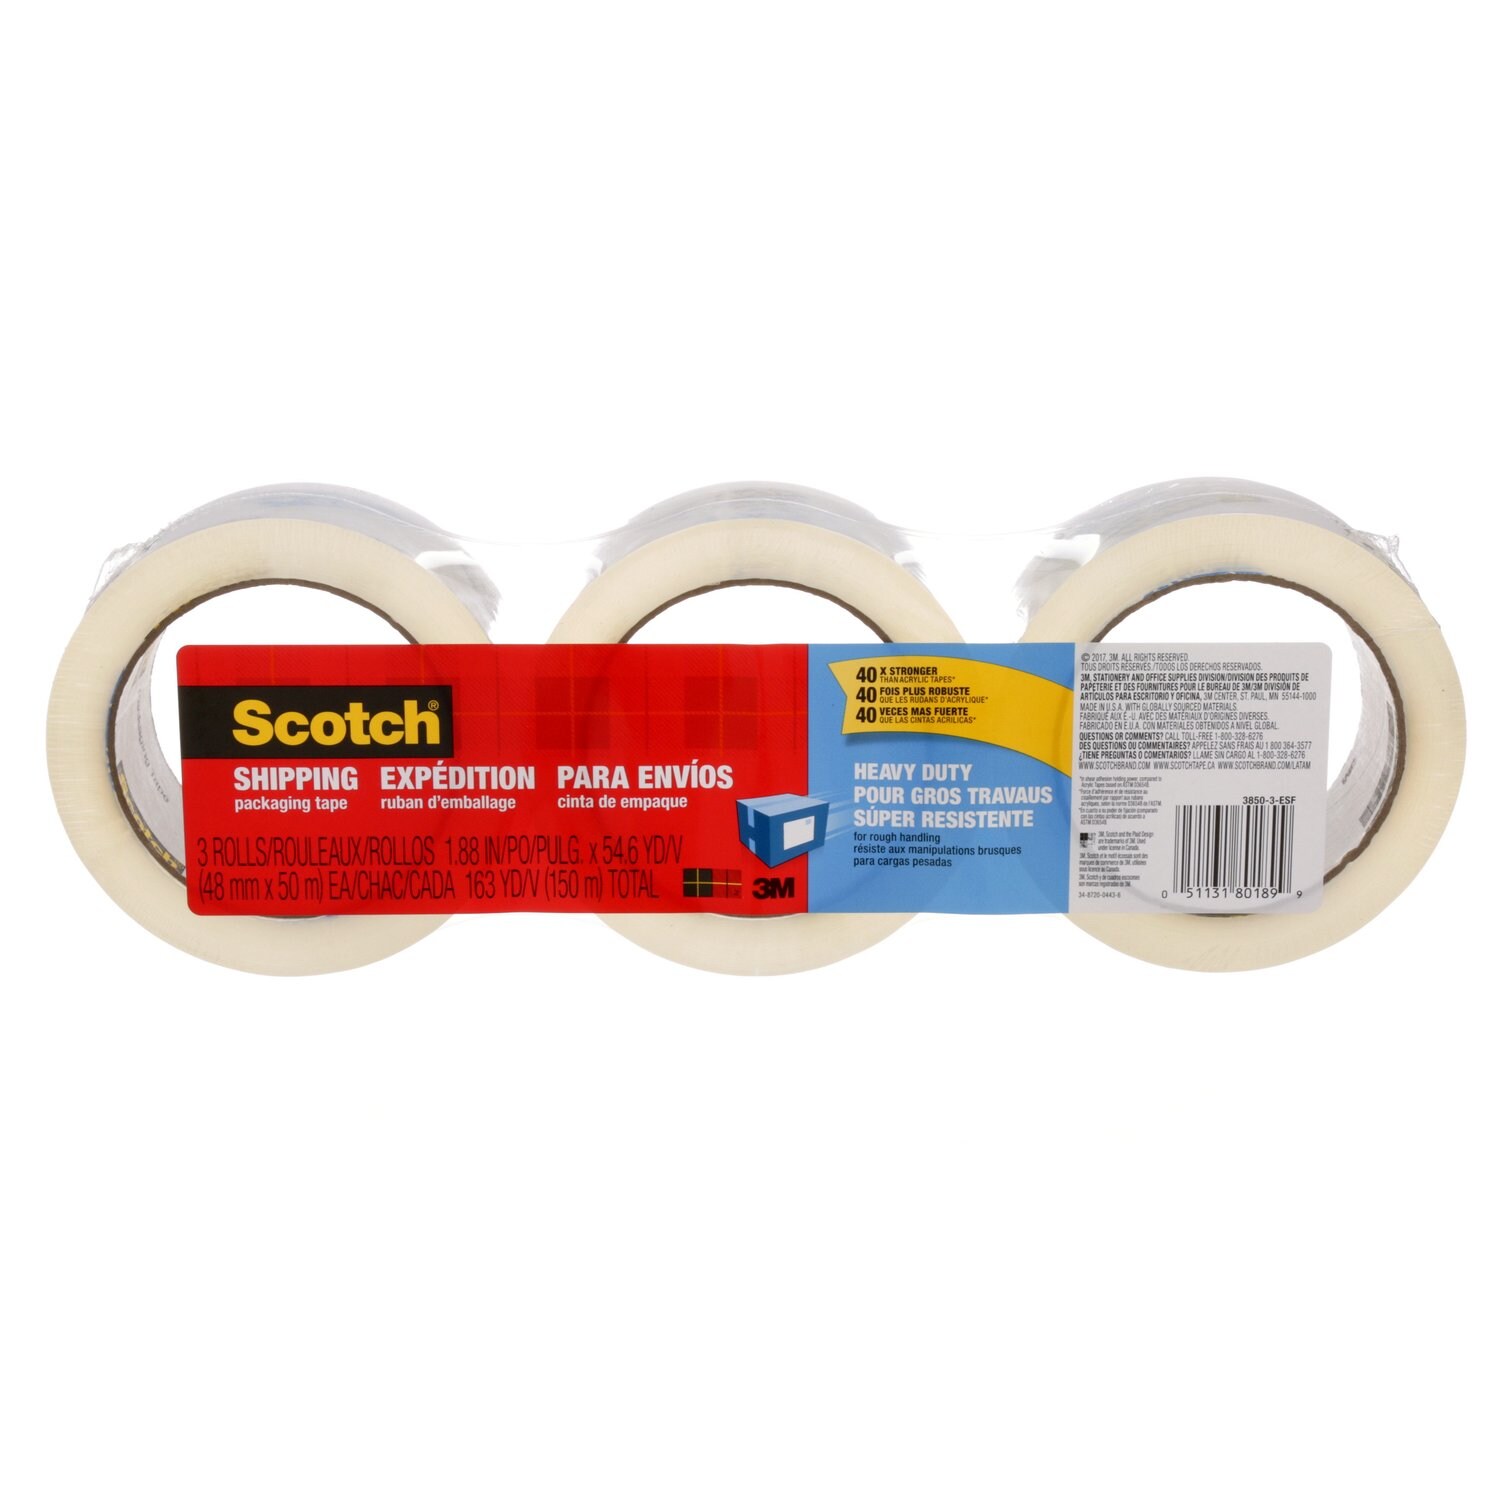 7100159401 - Scotch Heavy Duty Shipping Packaging Tape 3850-3-ESF, 1.88 in. x 54.6
yd. (48 mm x 50 m)